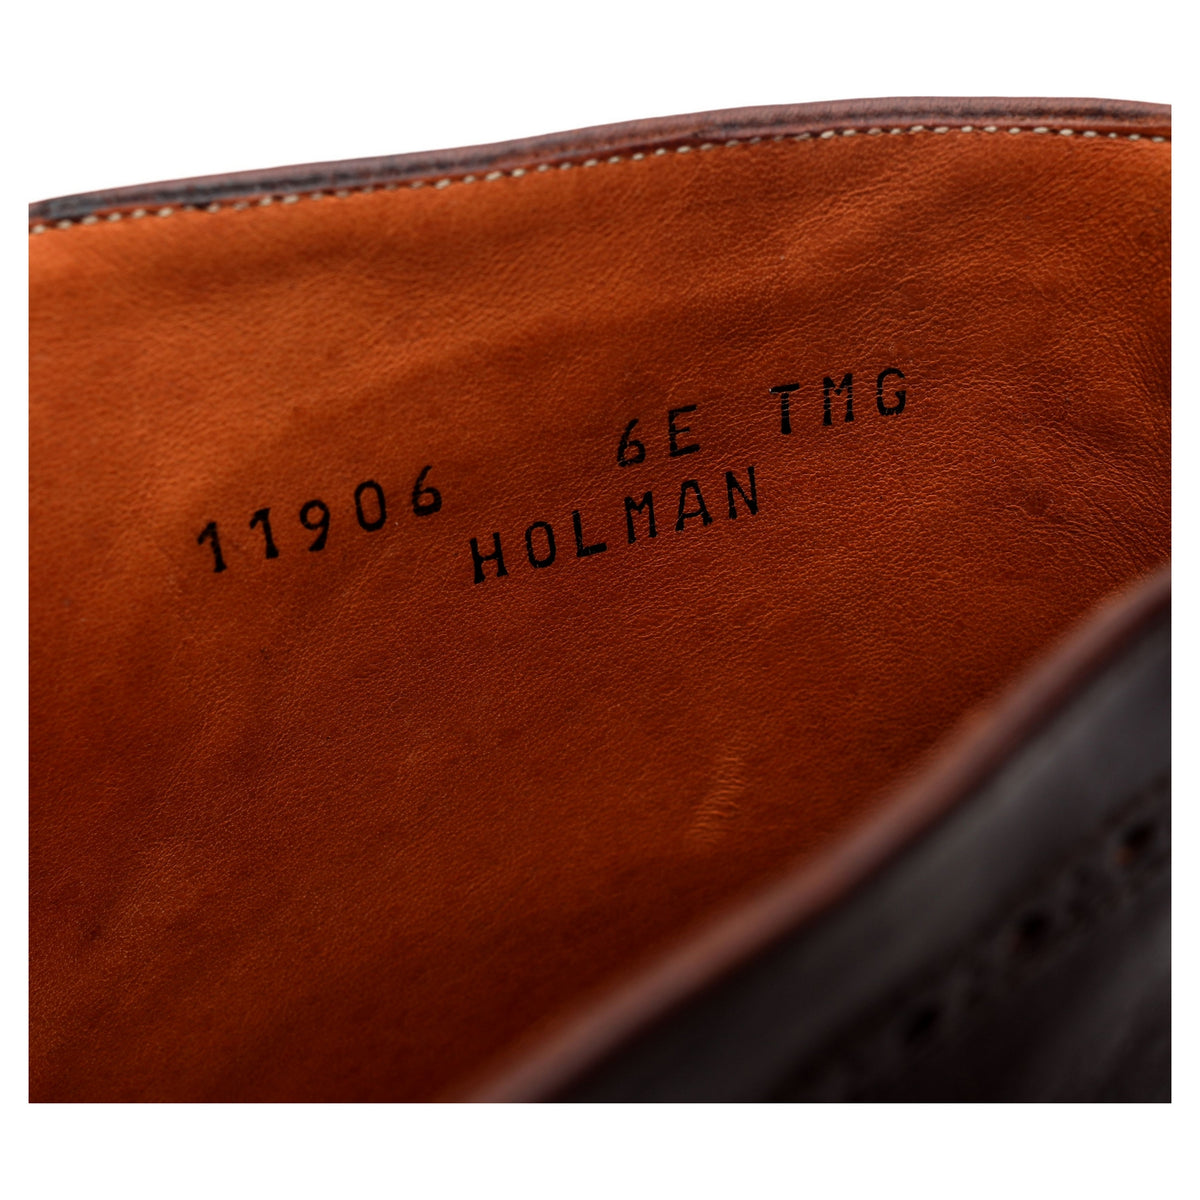 &#39;Holman&#39; Dark Brown Leather Boots UK 6 E